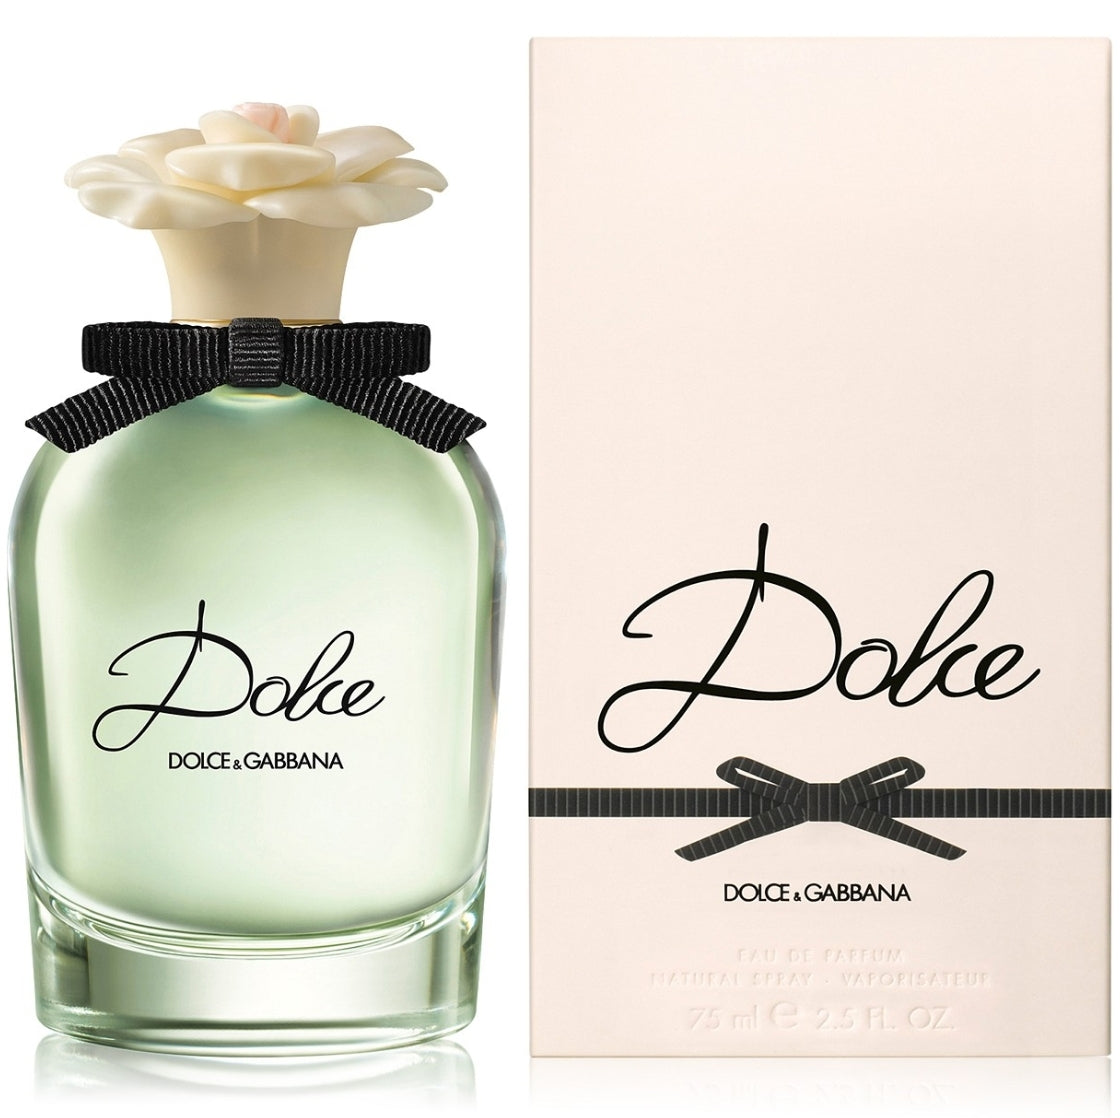 Dolce & Gabbana DOLCE&GABBANA Dolce Eau de Parfum Spray Fragrance Collection